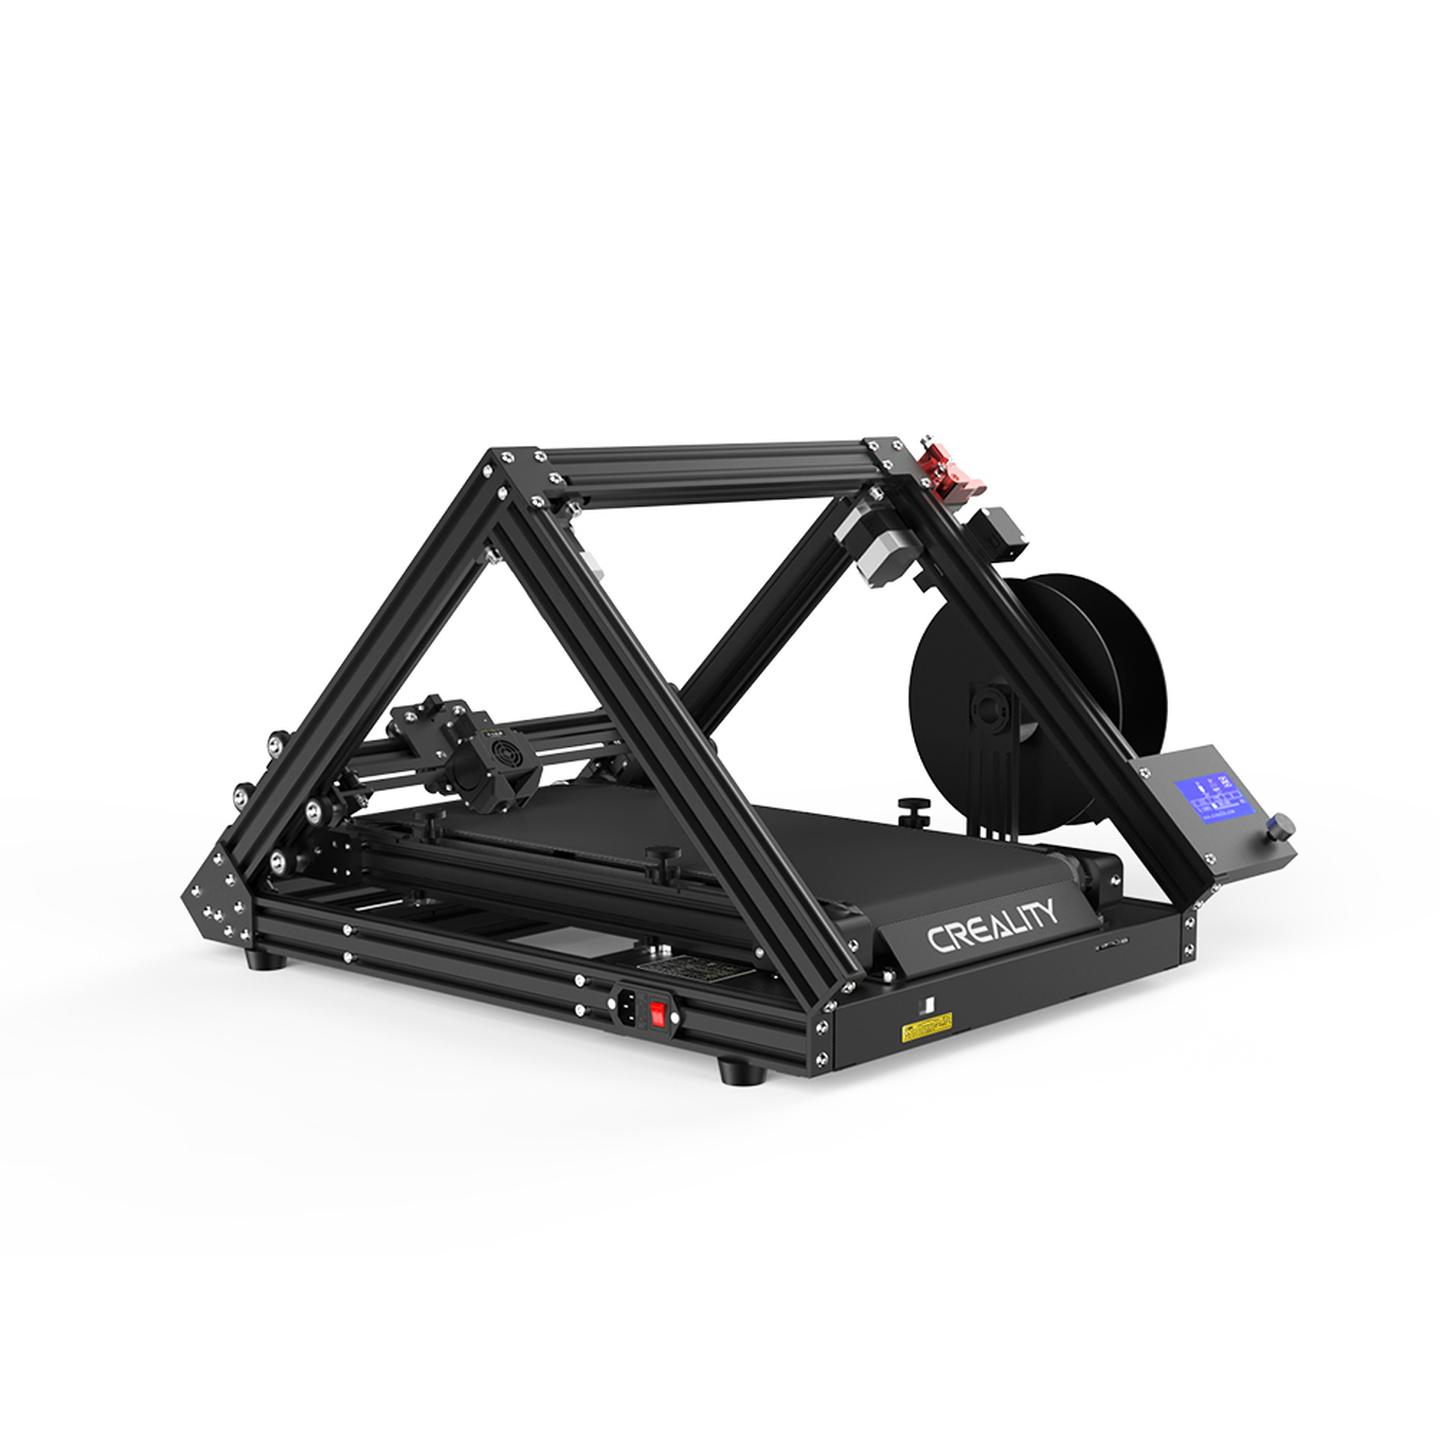 Creality CR-30 Large Format 3D Printer